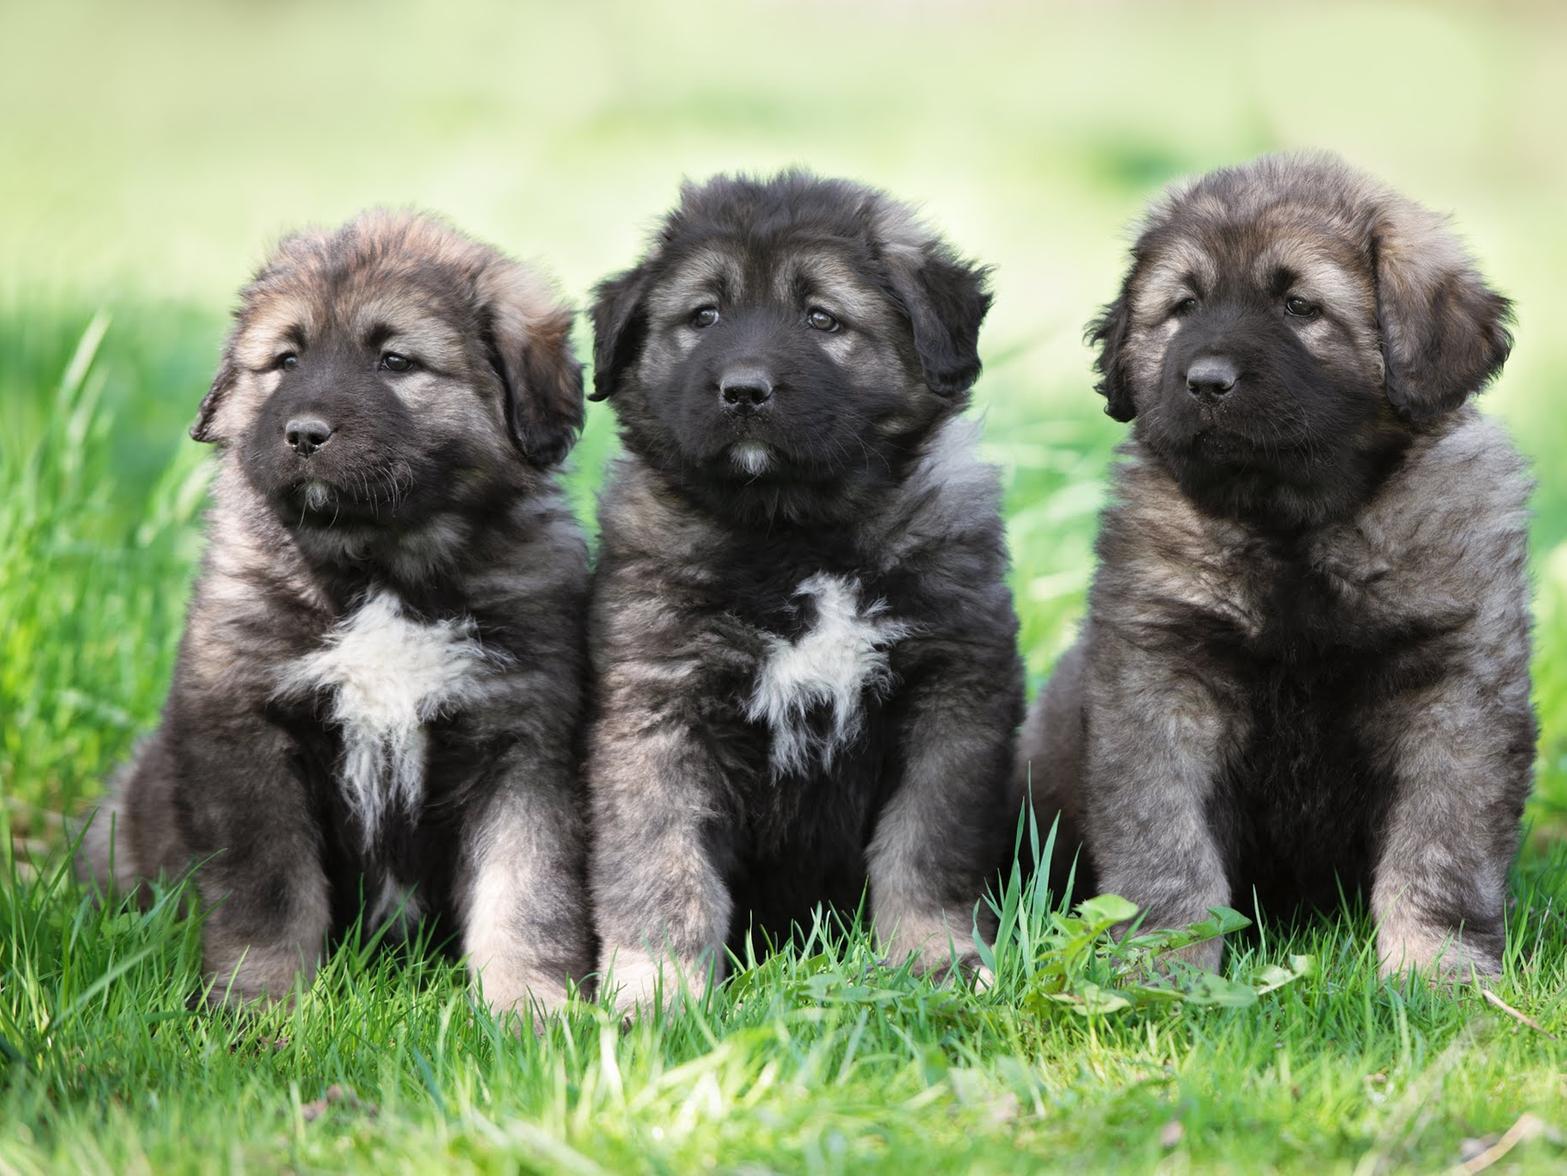 Three Caucasian Ovcharka dogs were stolen in 2019, according to police figures.